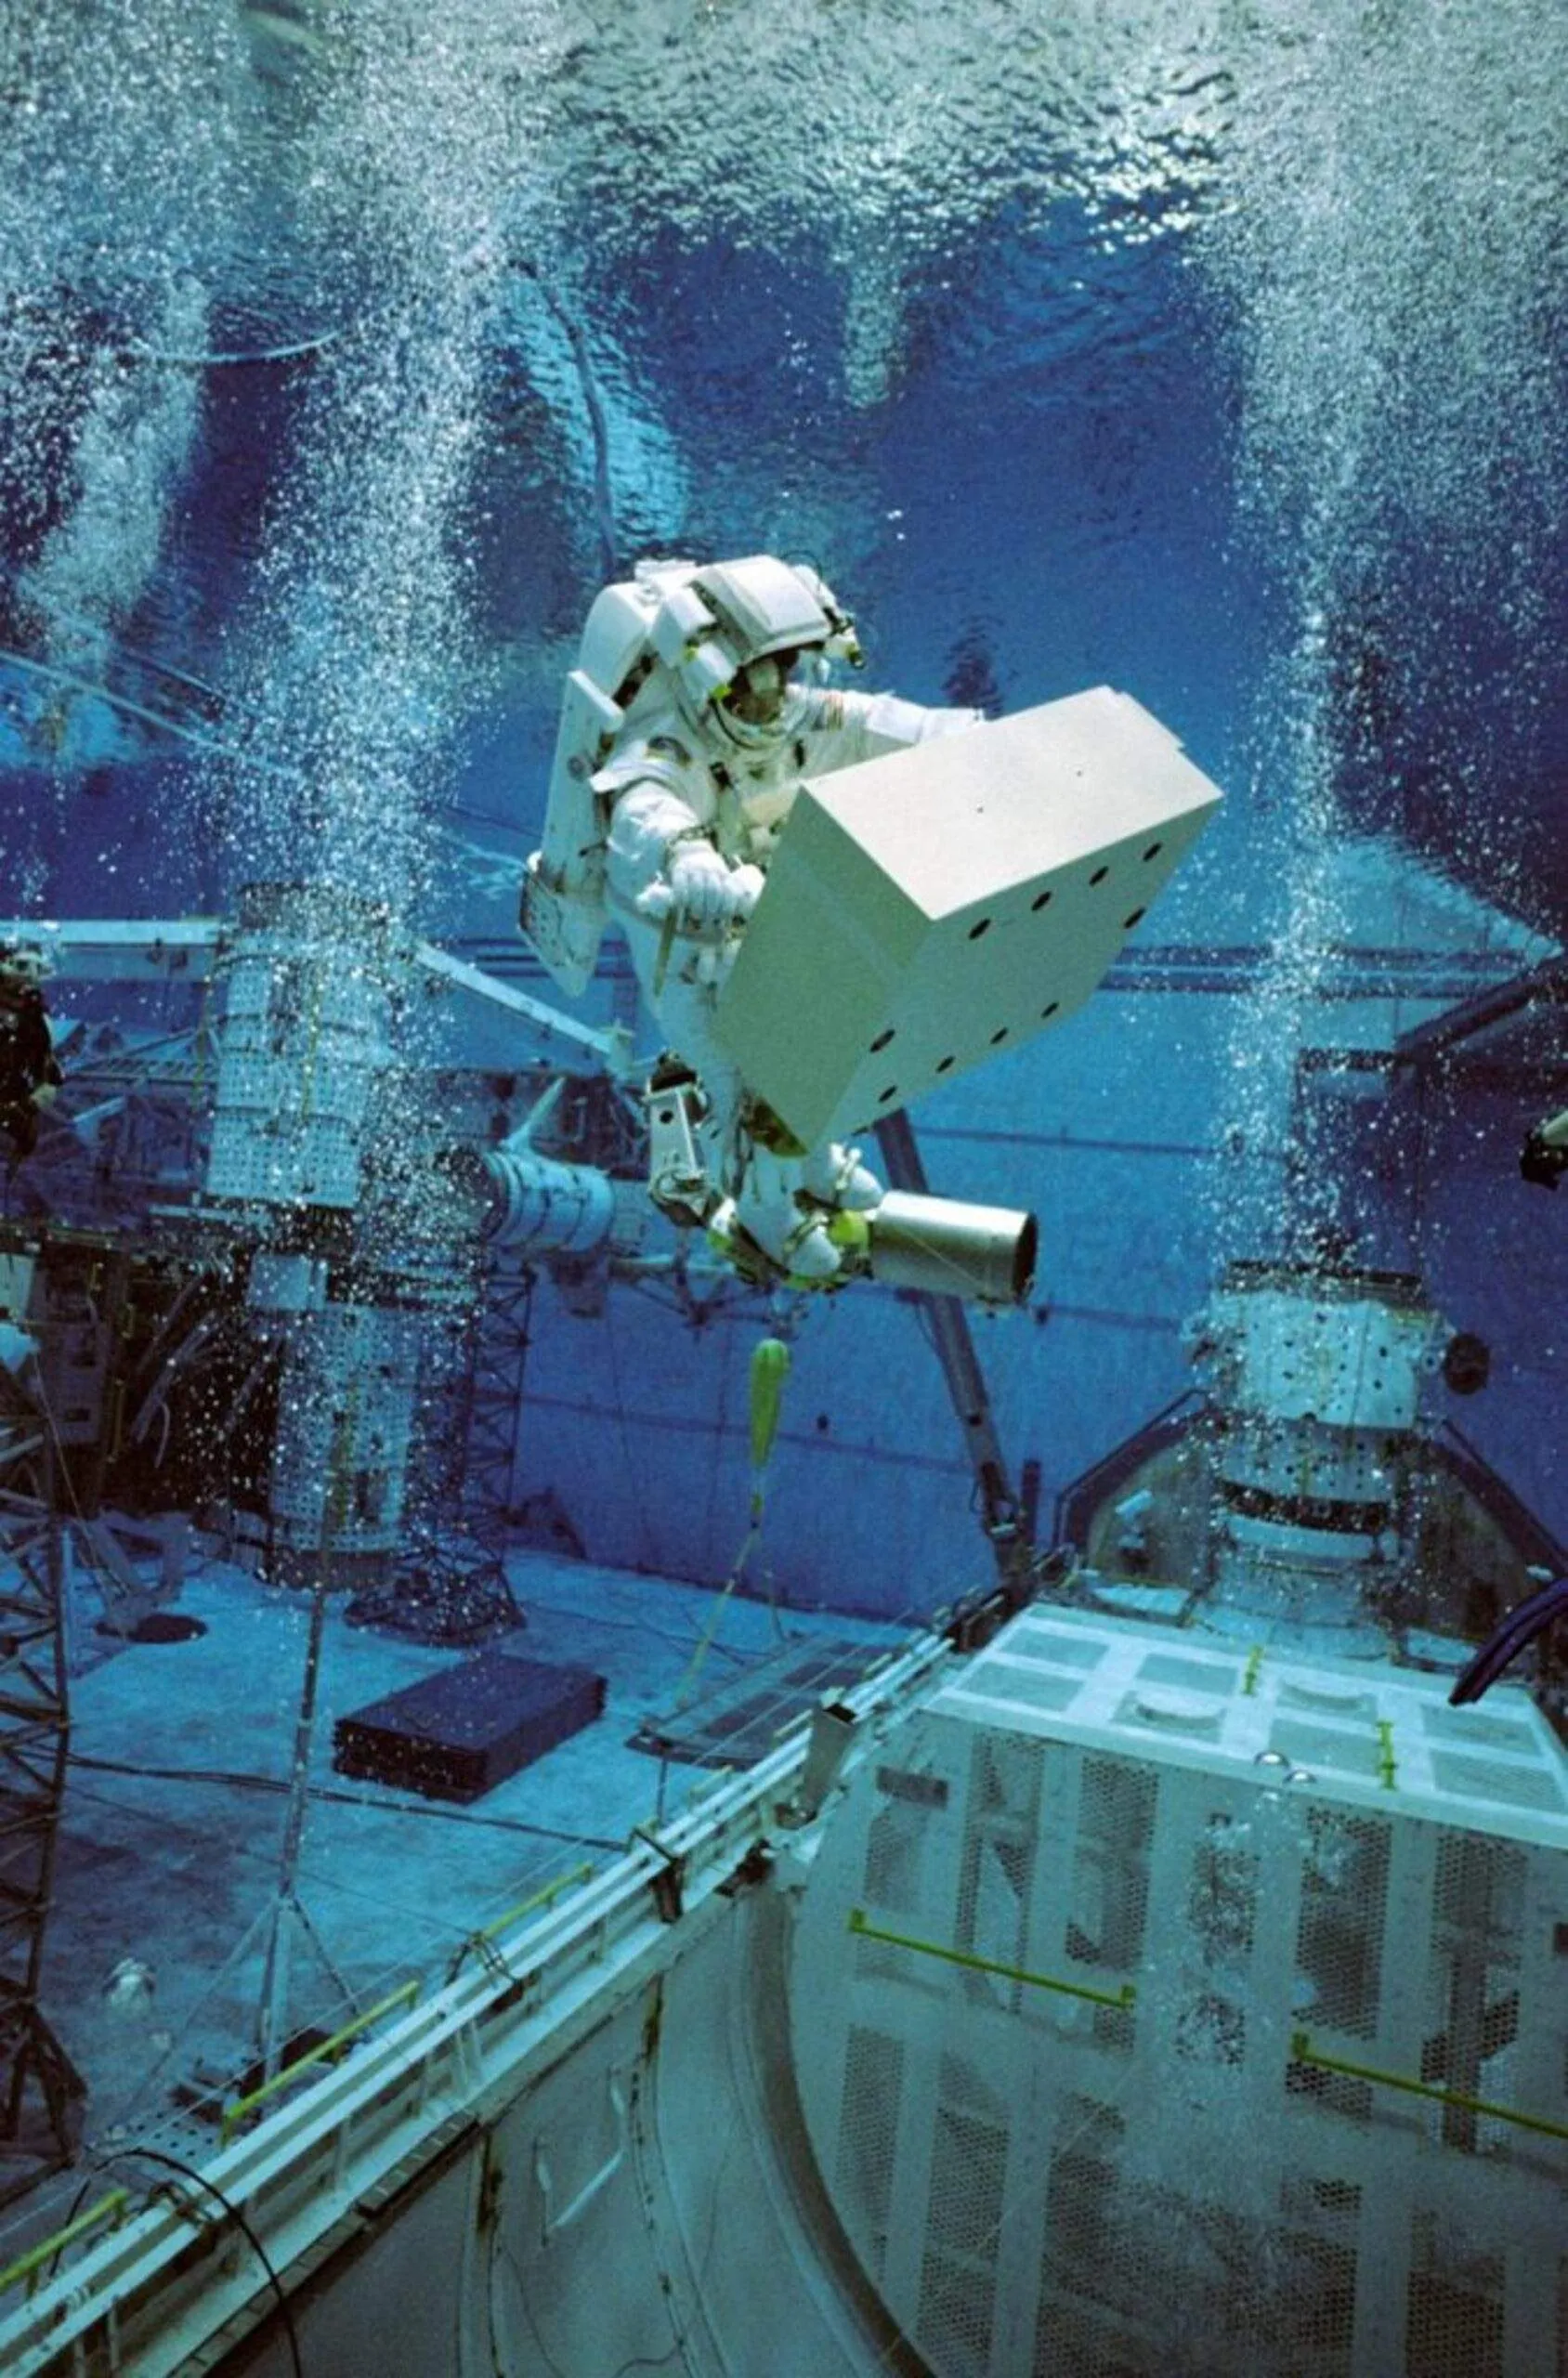 Image of astronaut training underwater